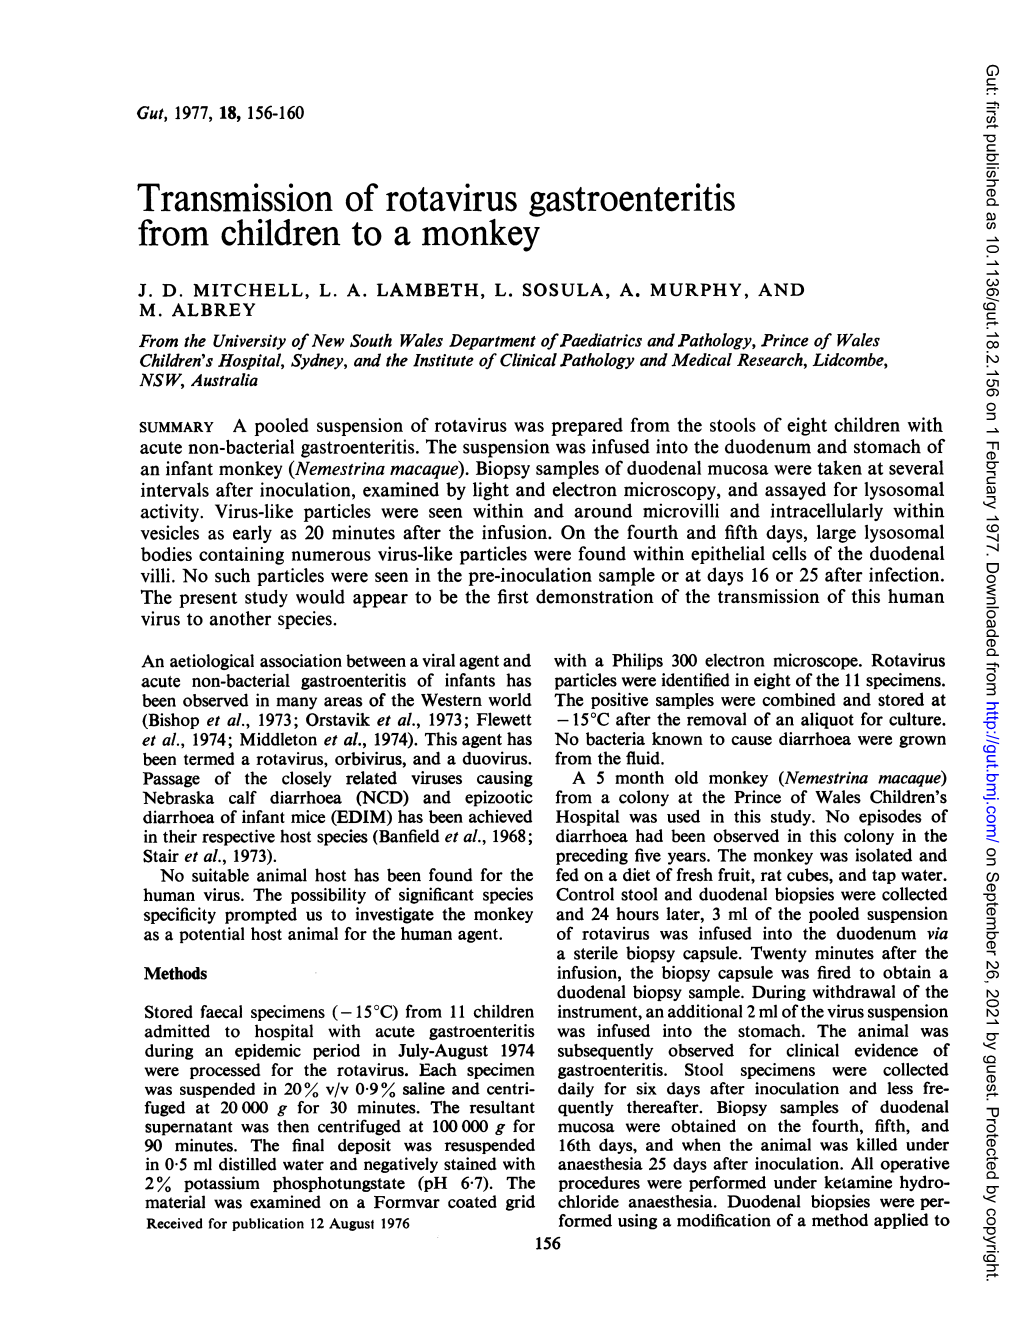 Transmission of Rotavirus Gastroenteritis from Children to a Monkey